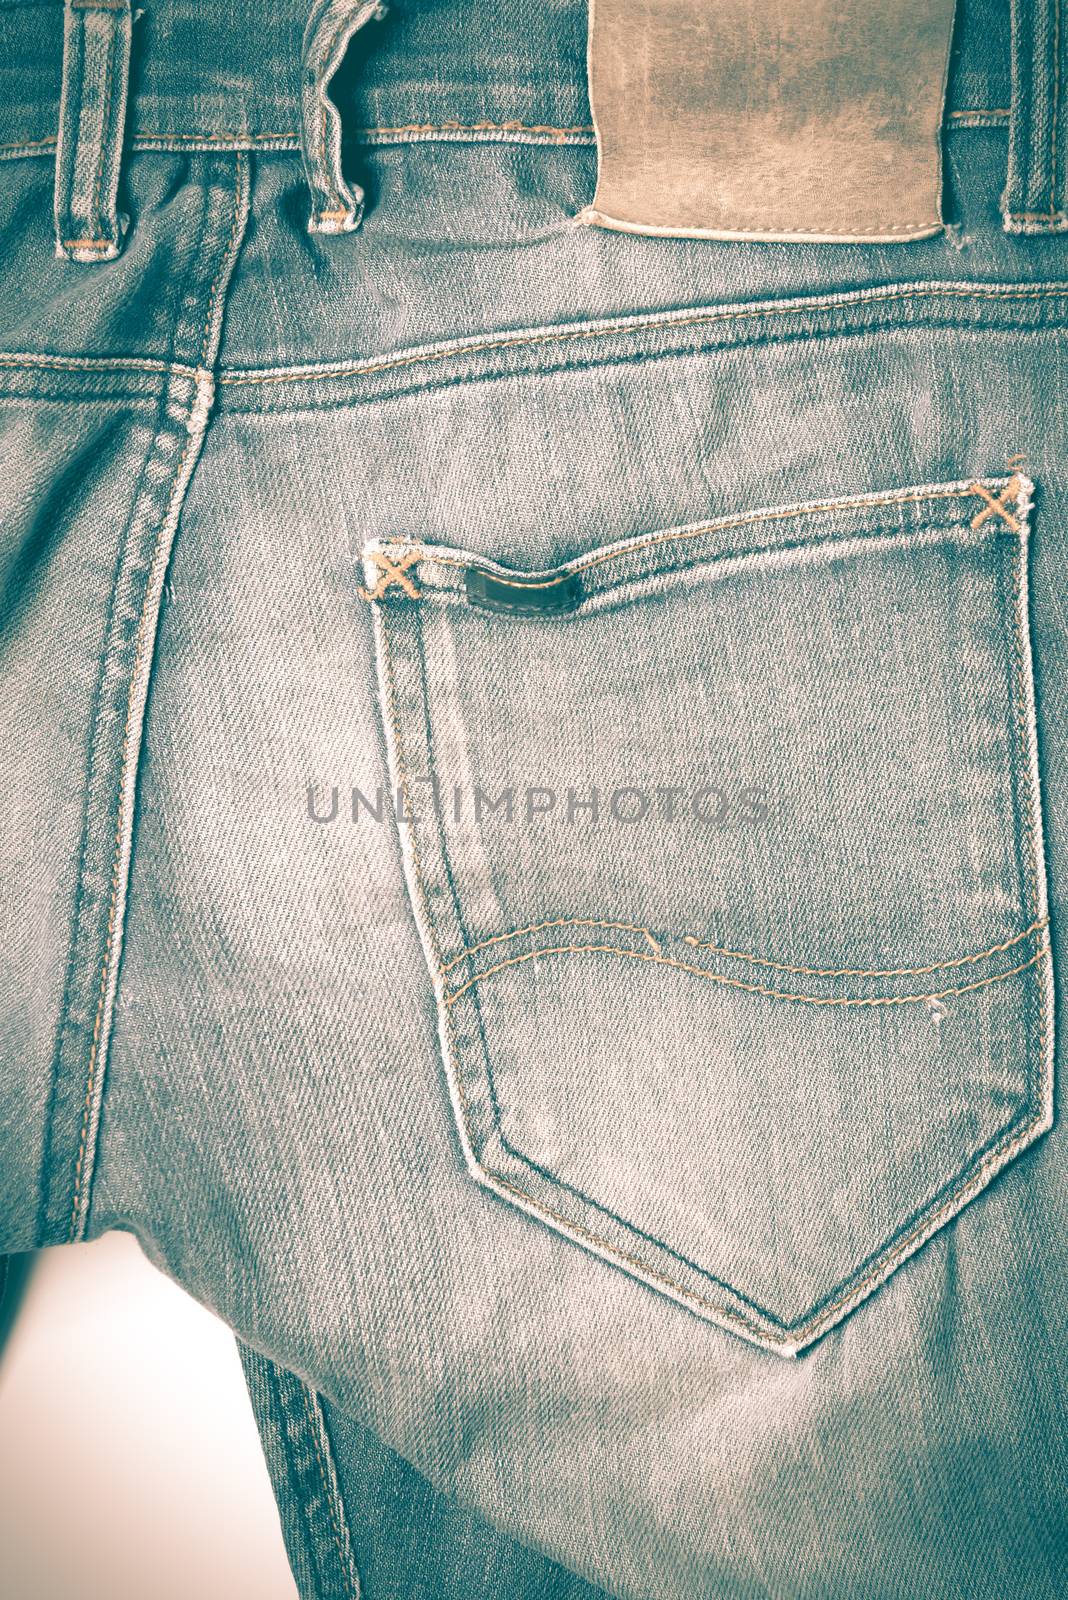 label on jean pants retro vintage style